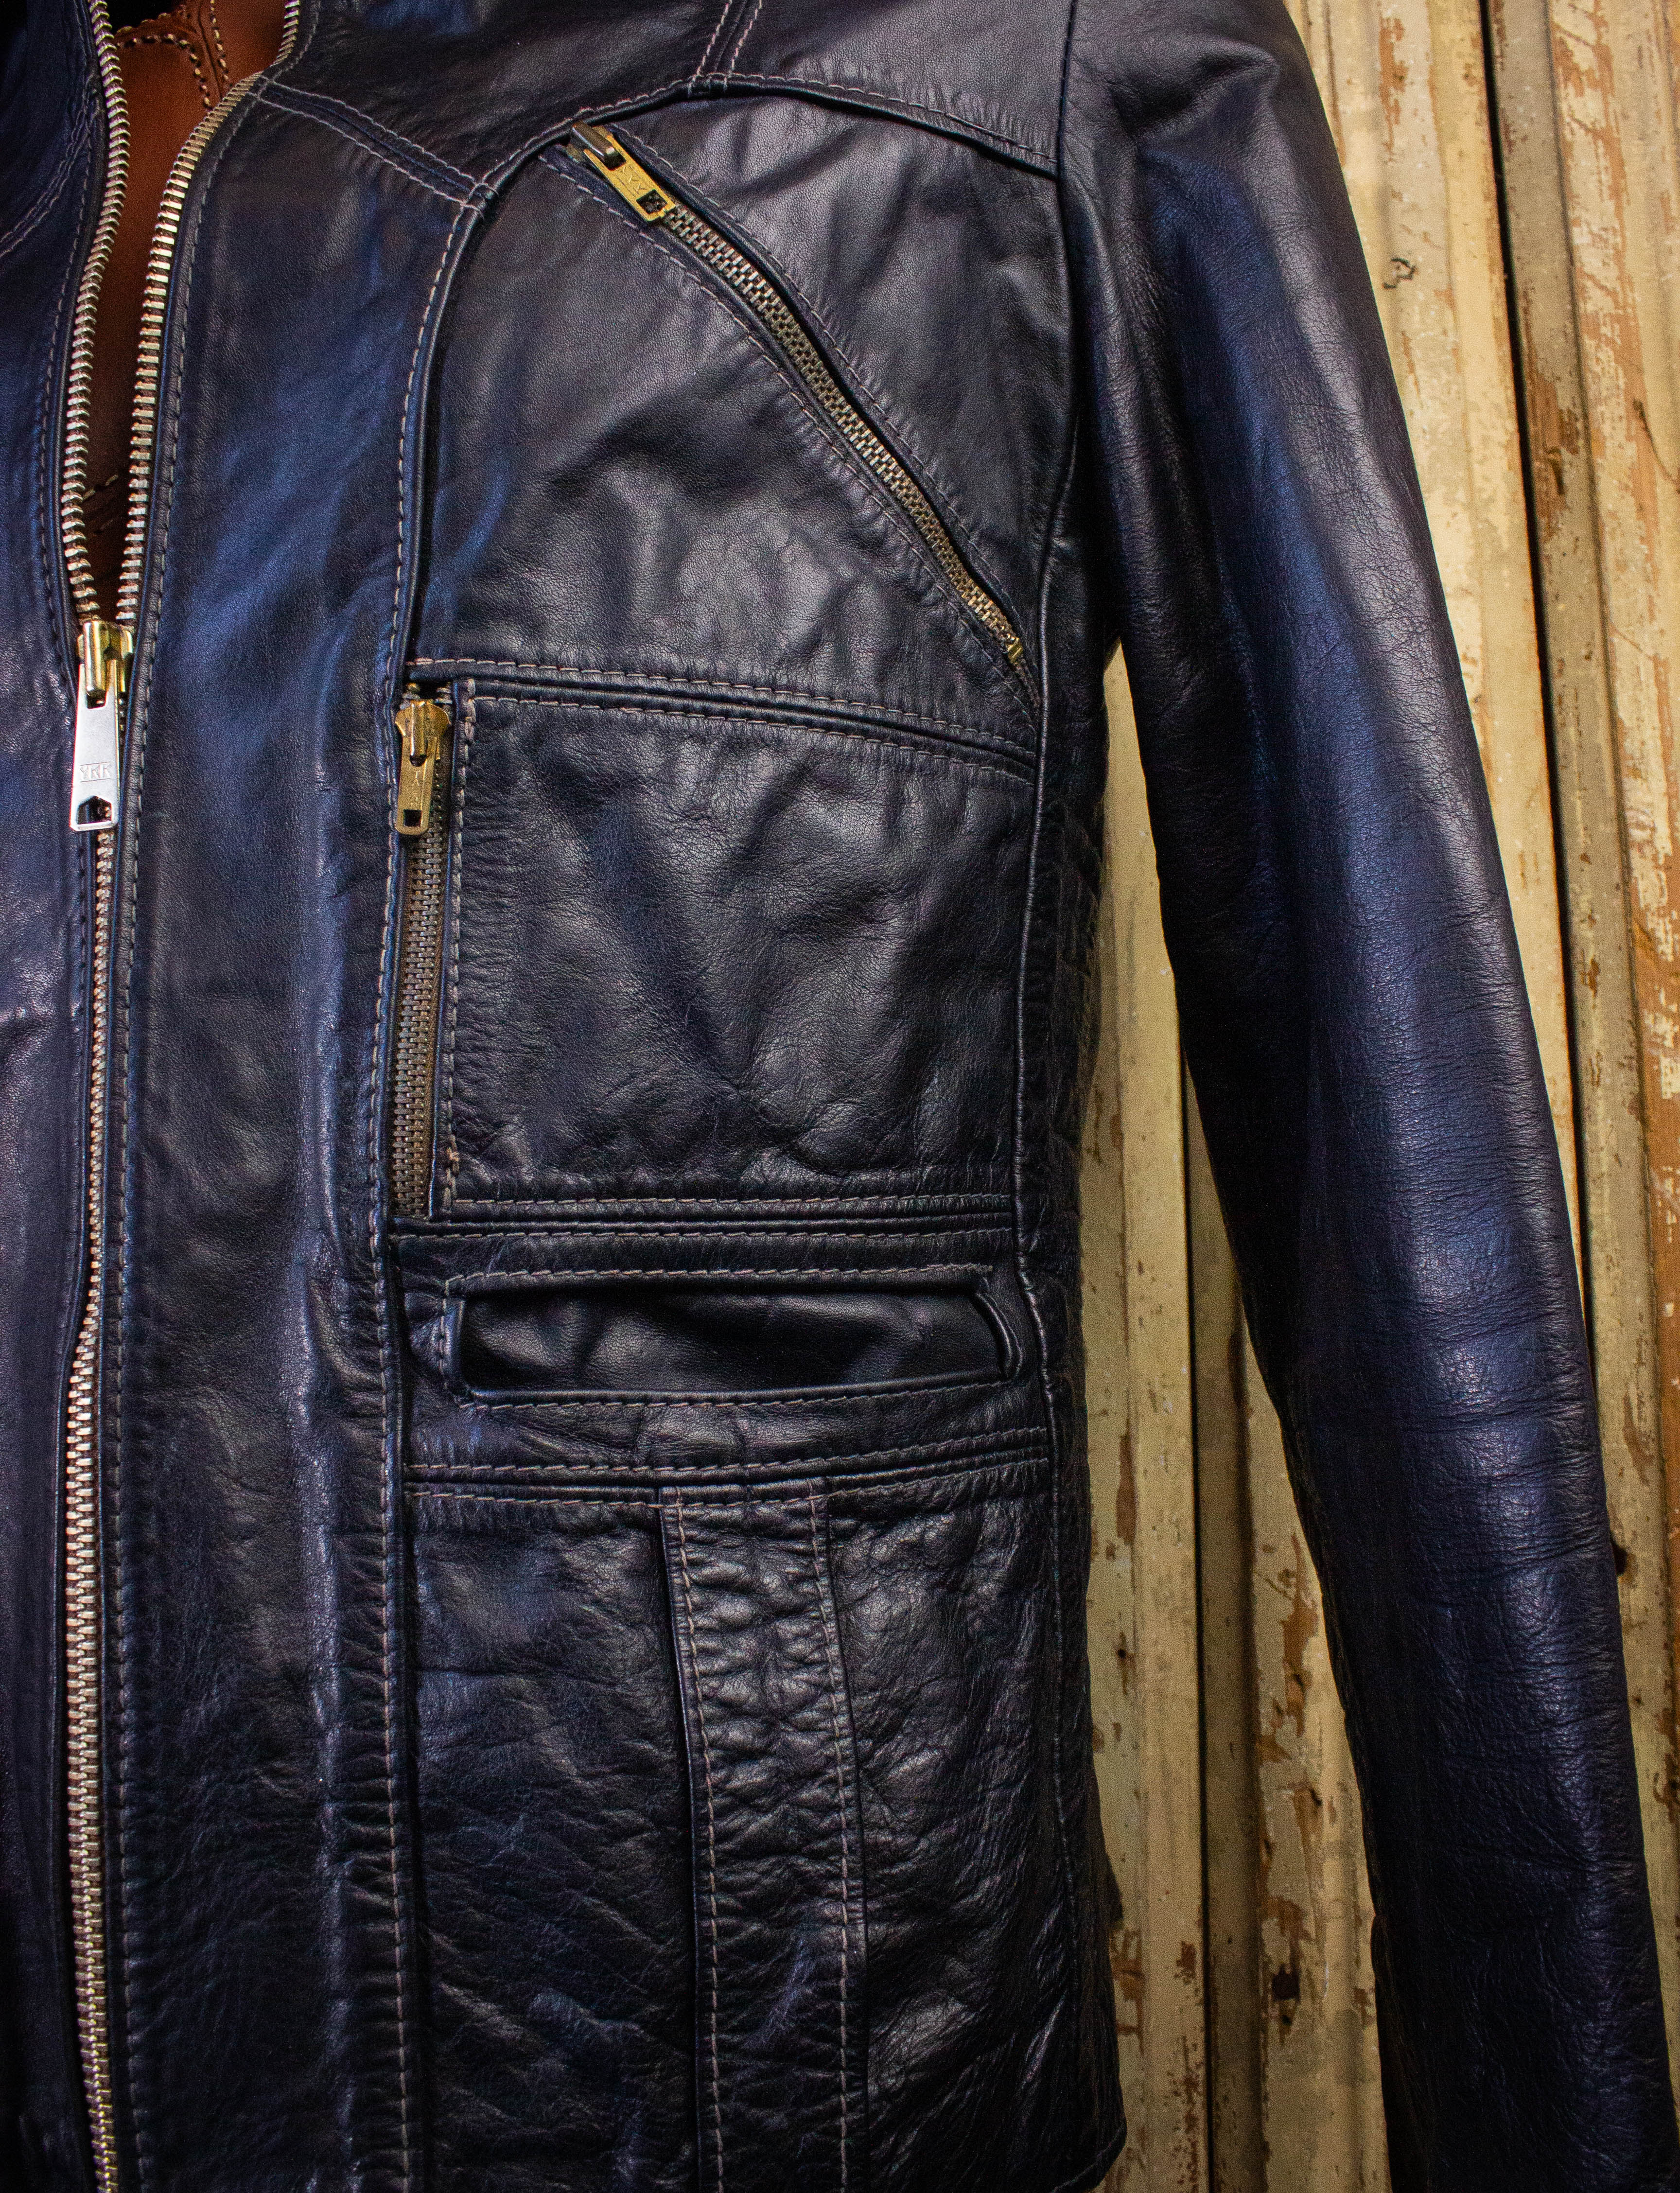 80's boutique of leathers leather jacket - ジャケット・アウター